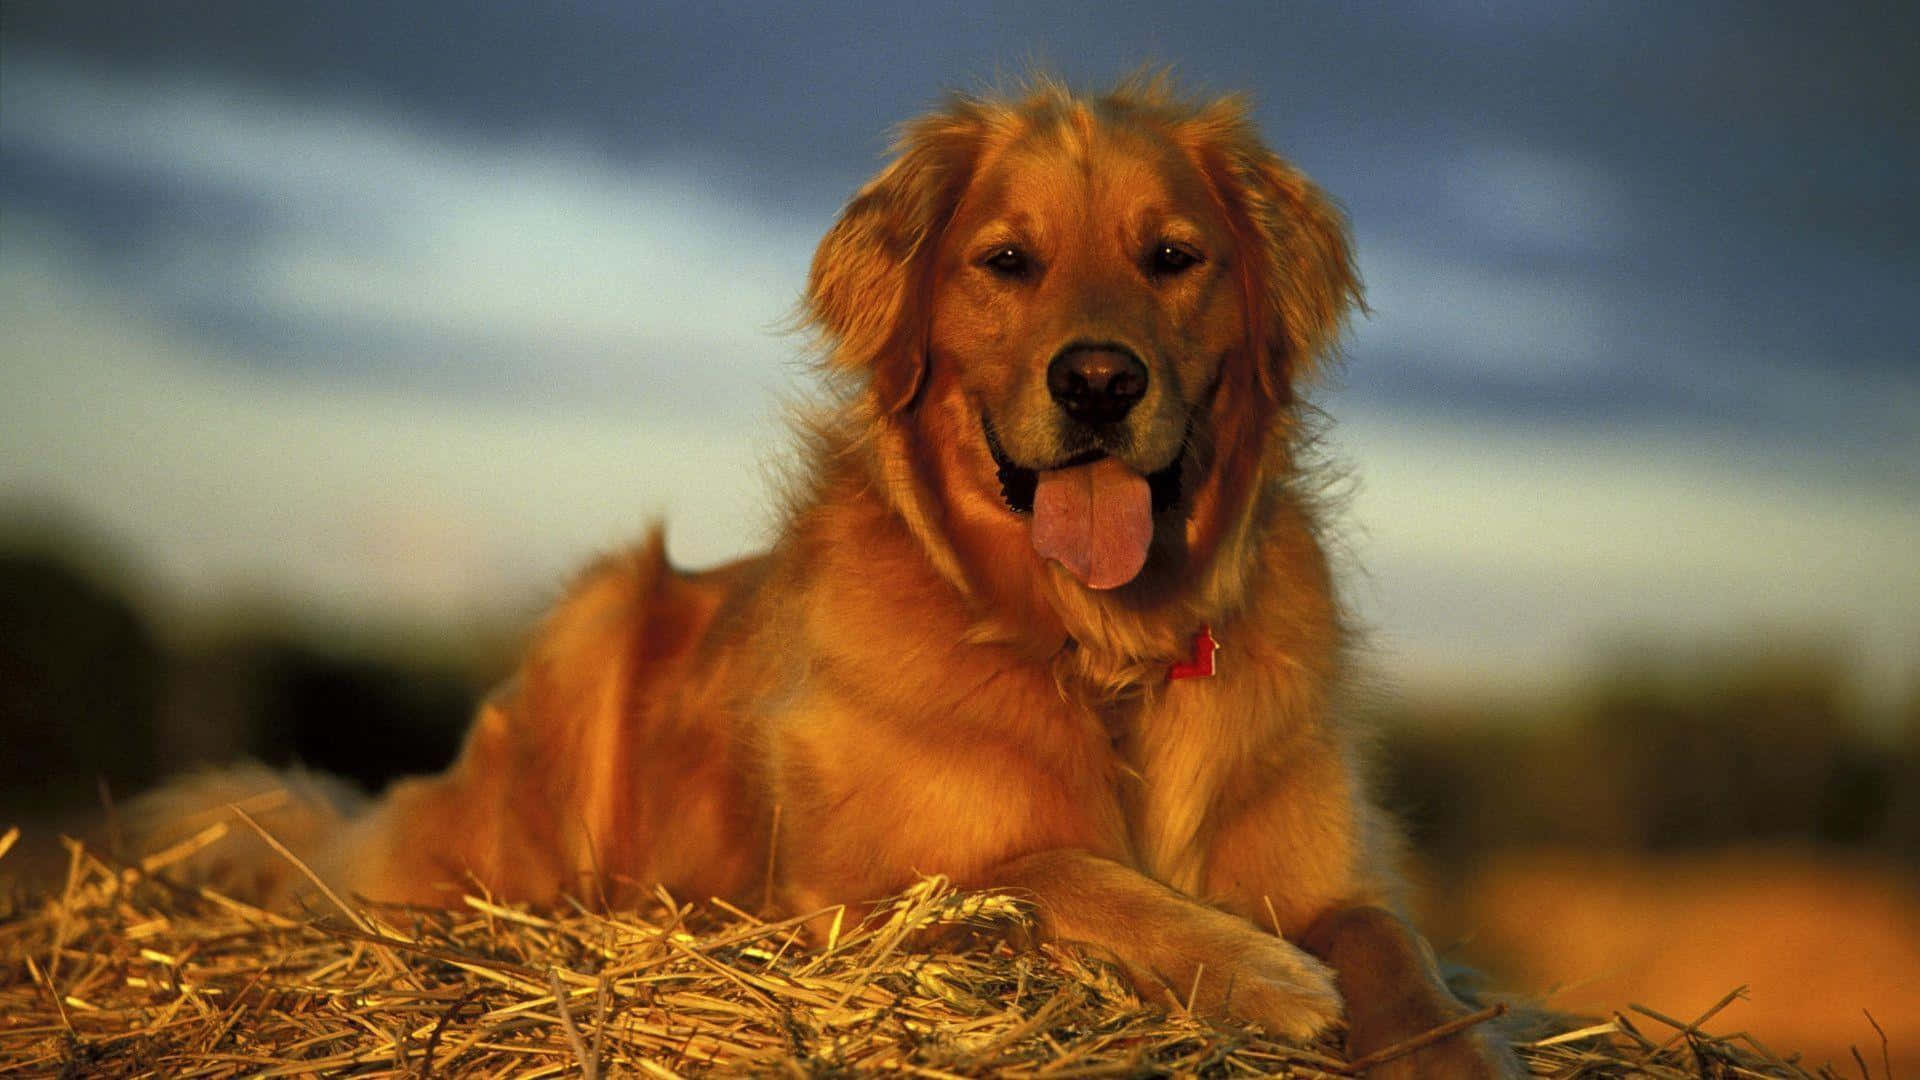 A cute guide dog, golden retriever, enjoying life in nature.